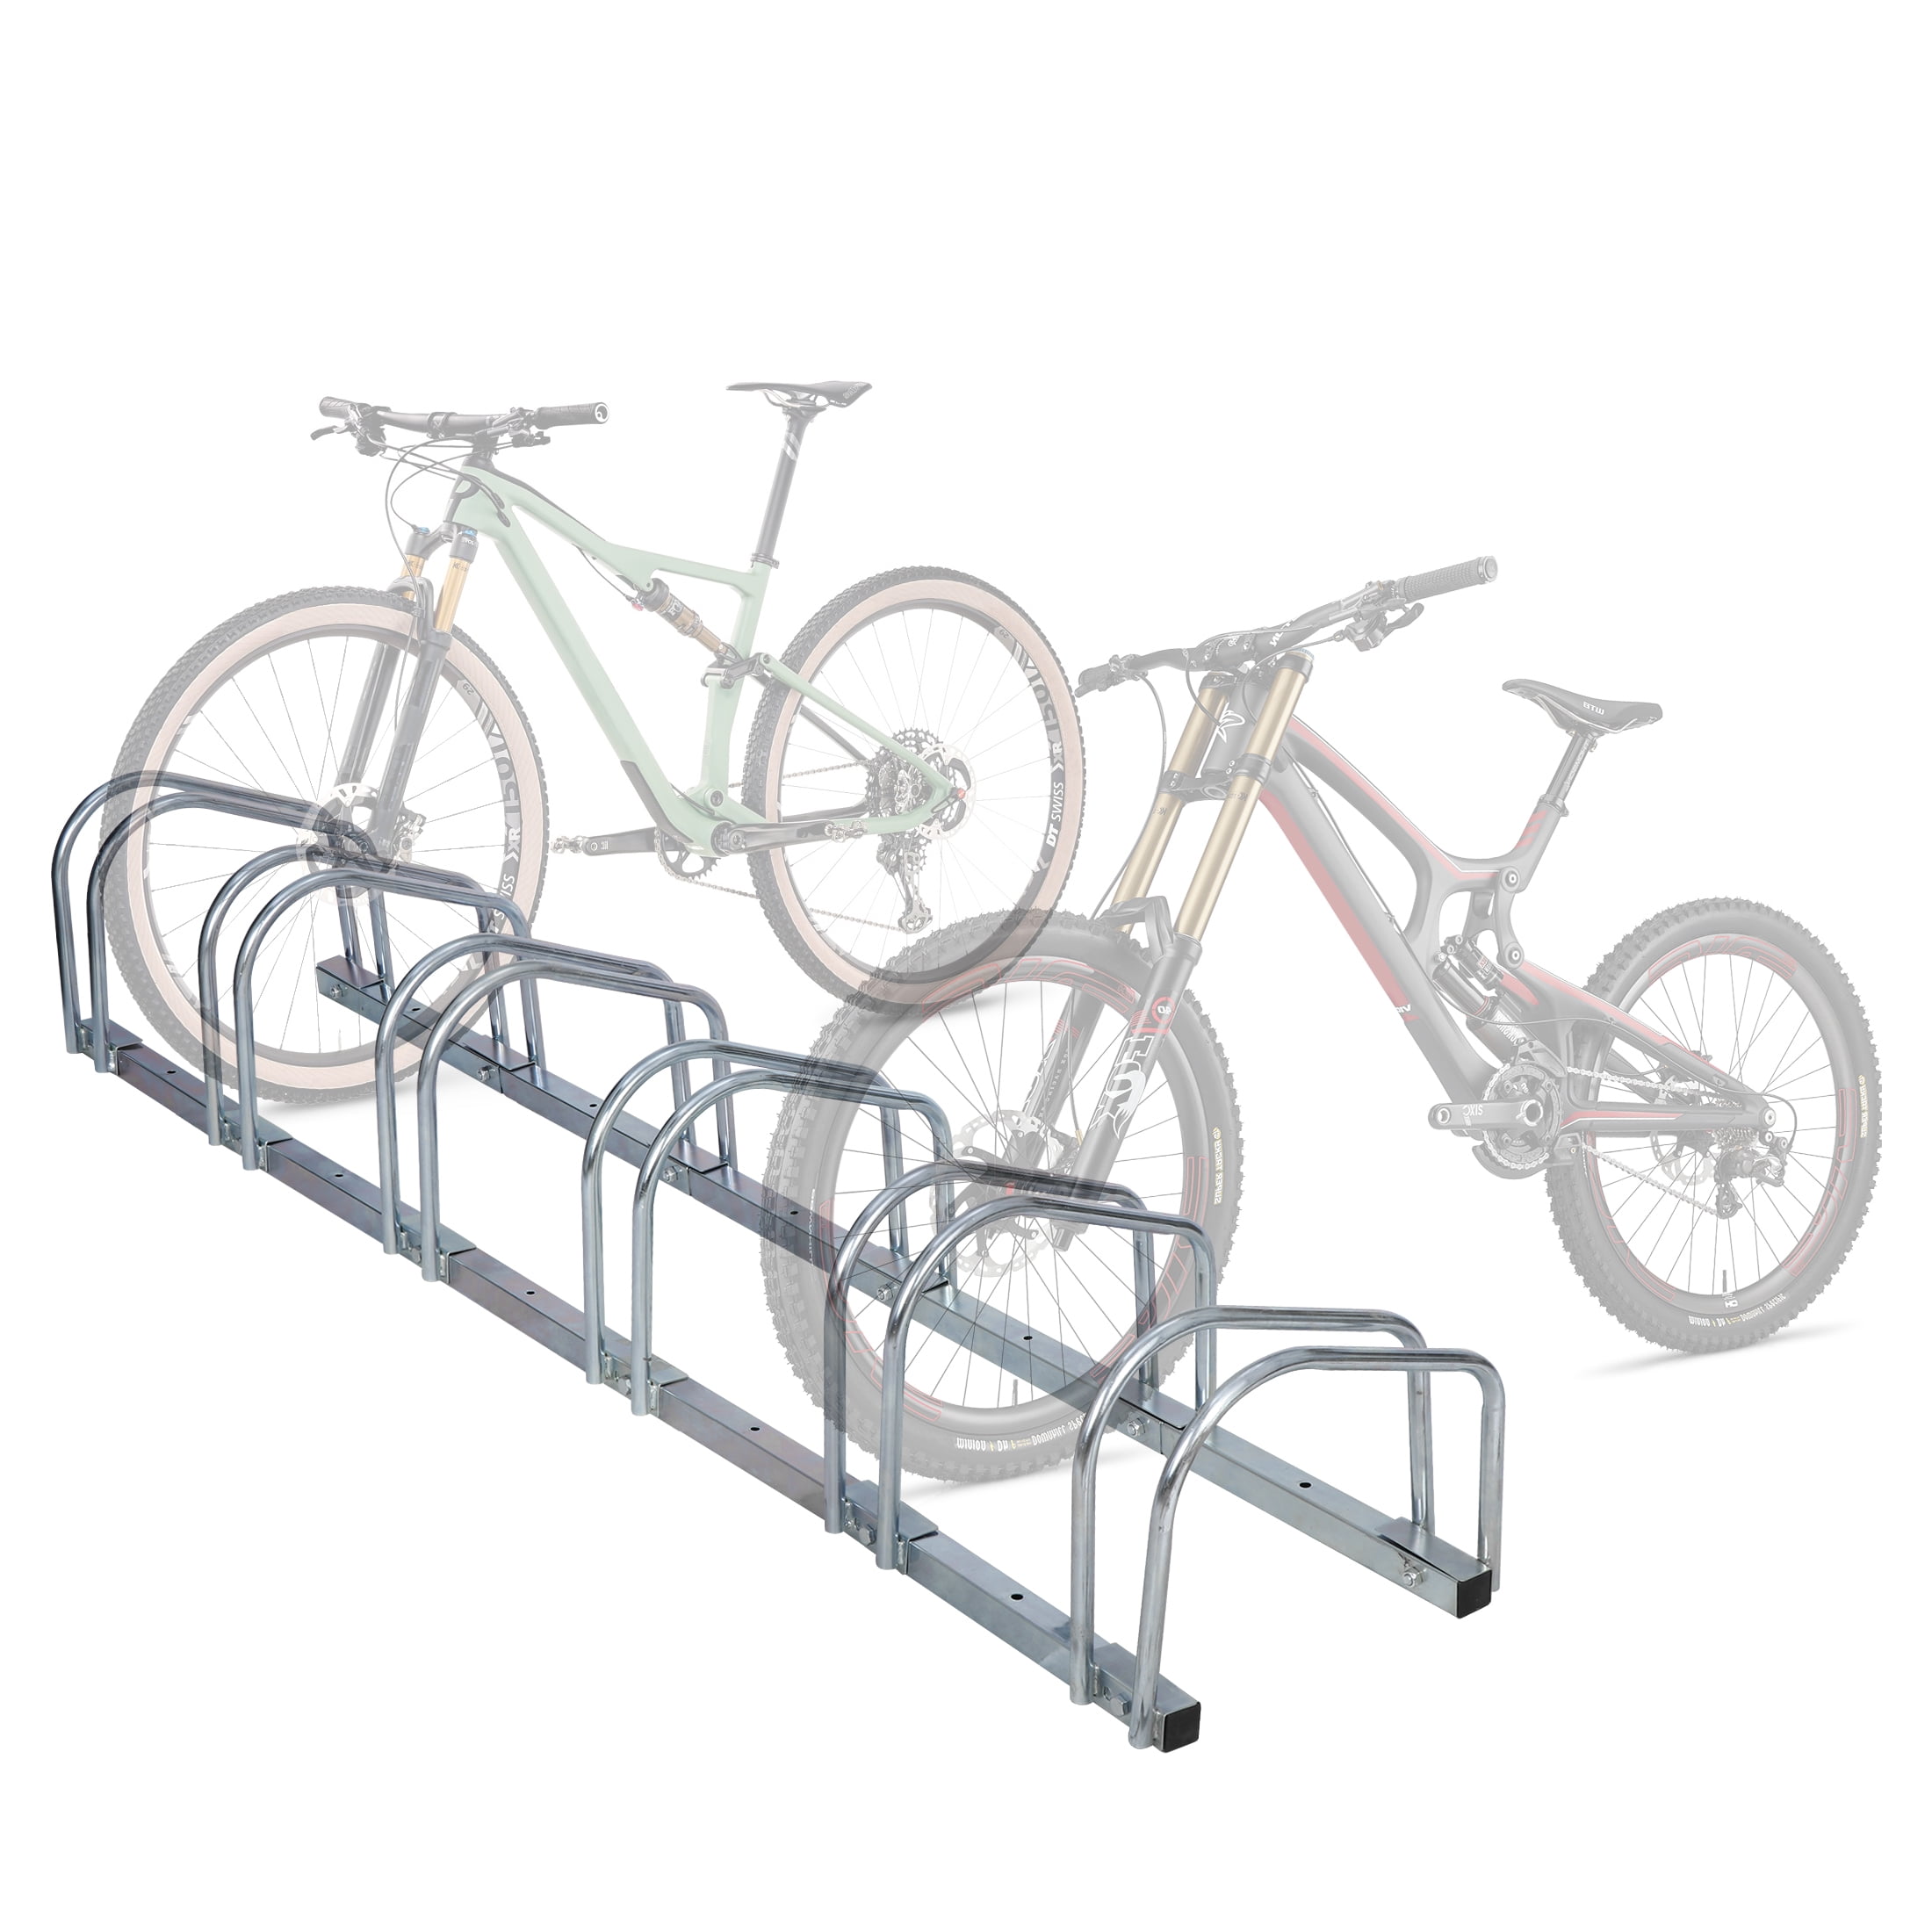 1-4 Bike Floor Parking Rack Storage Stand Bicycle,Floor Parking Organize Holder 